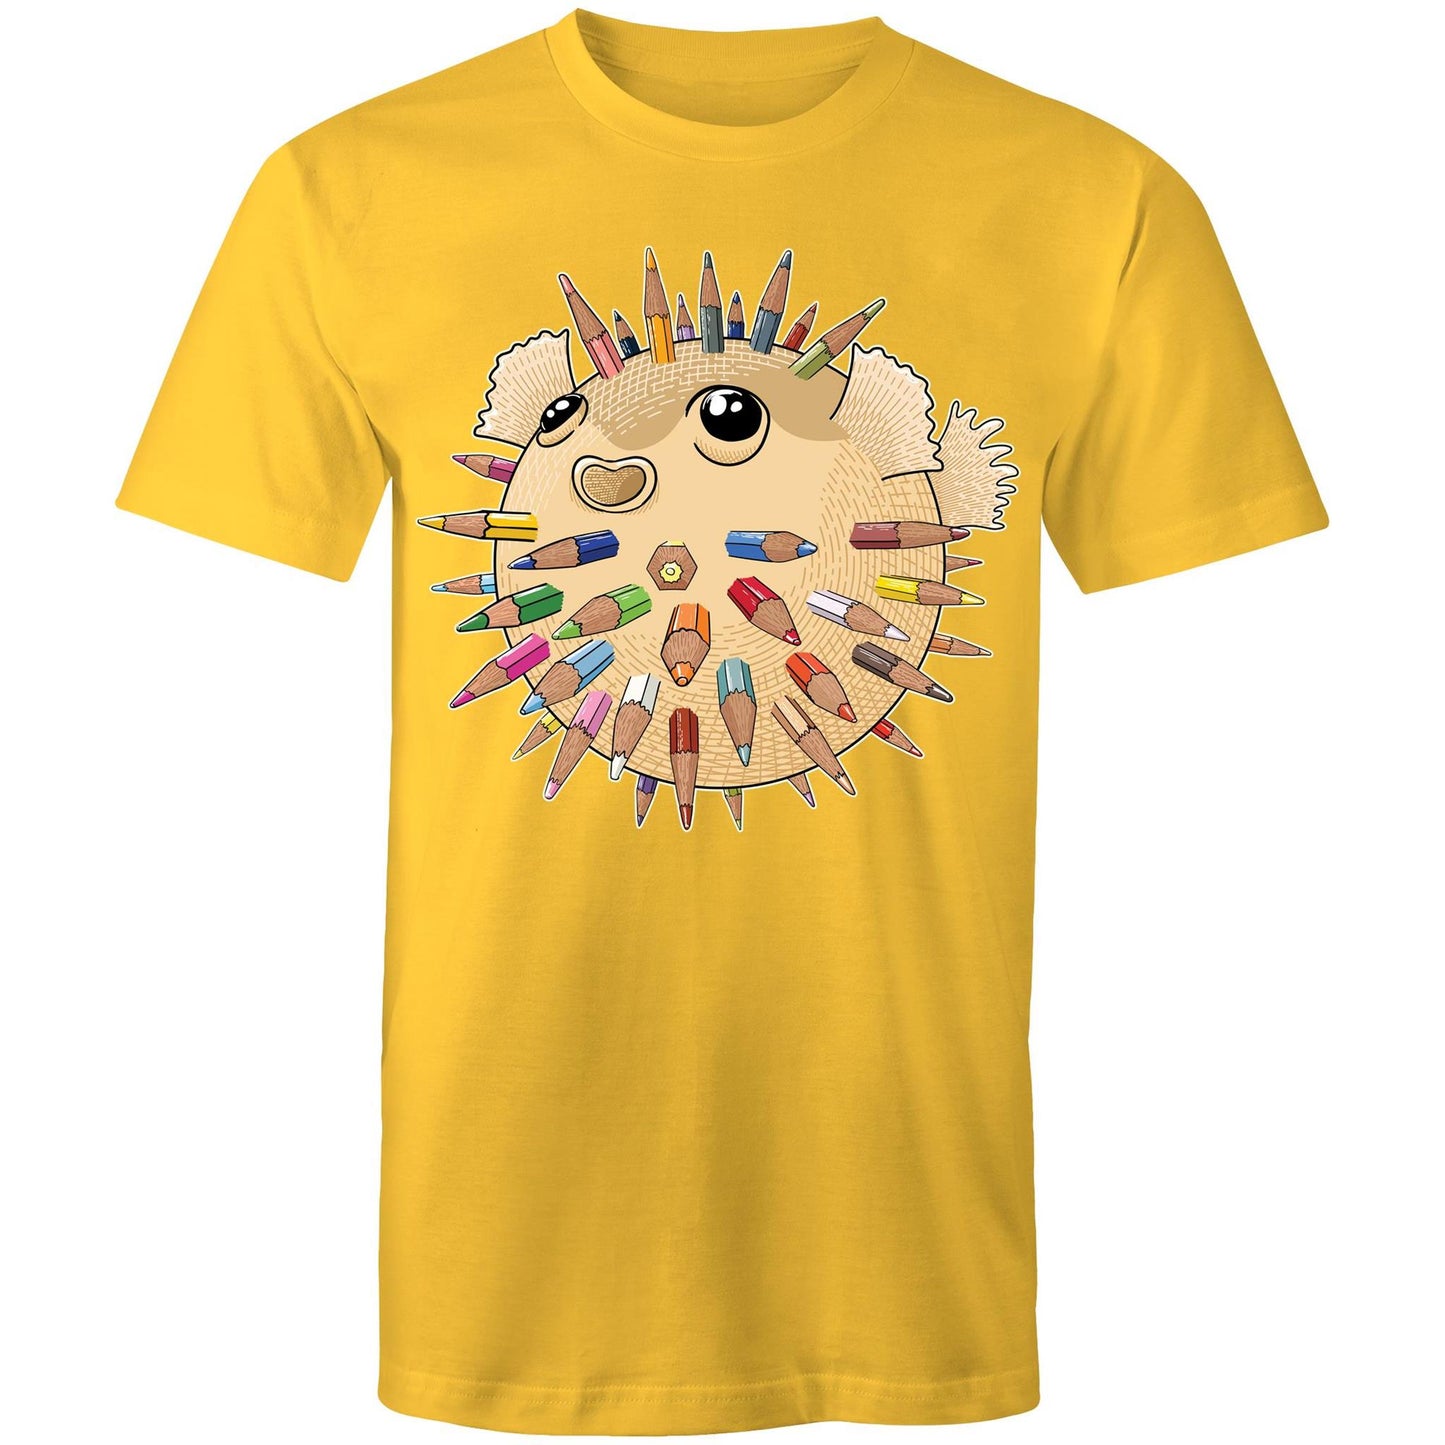 Fully Blown Art Fish - Men's T-Shirt